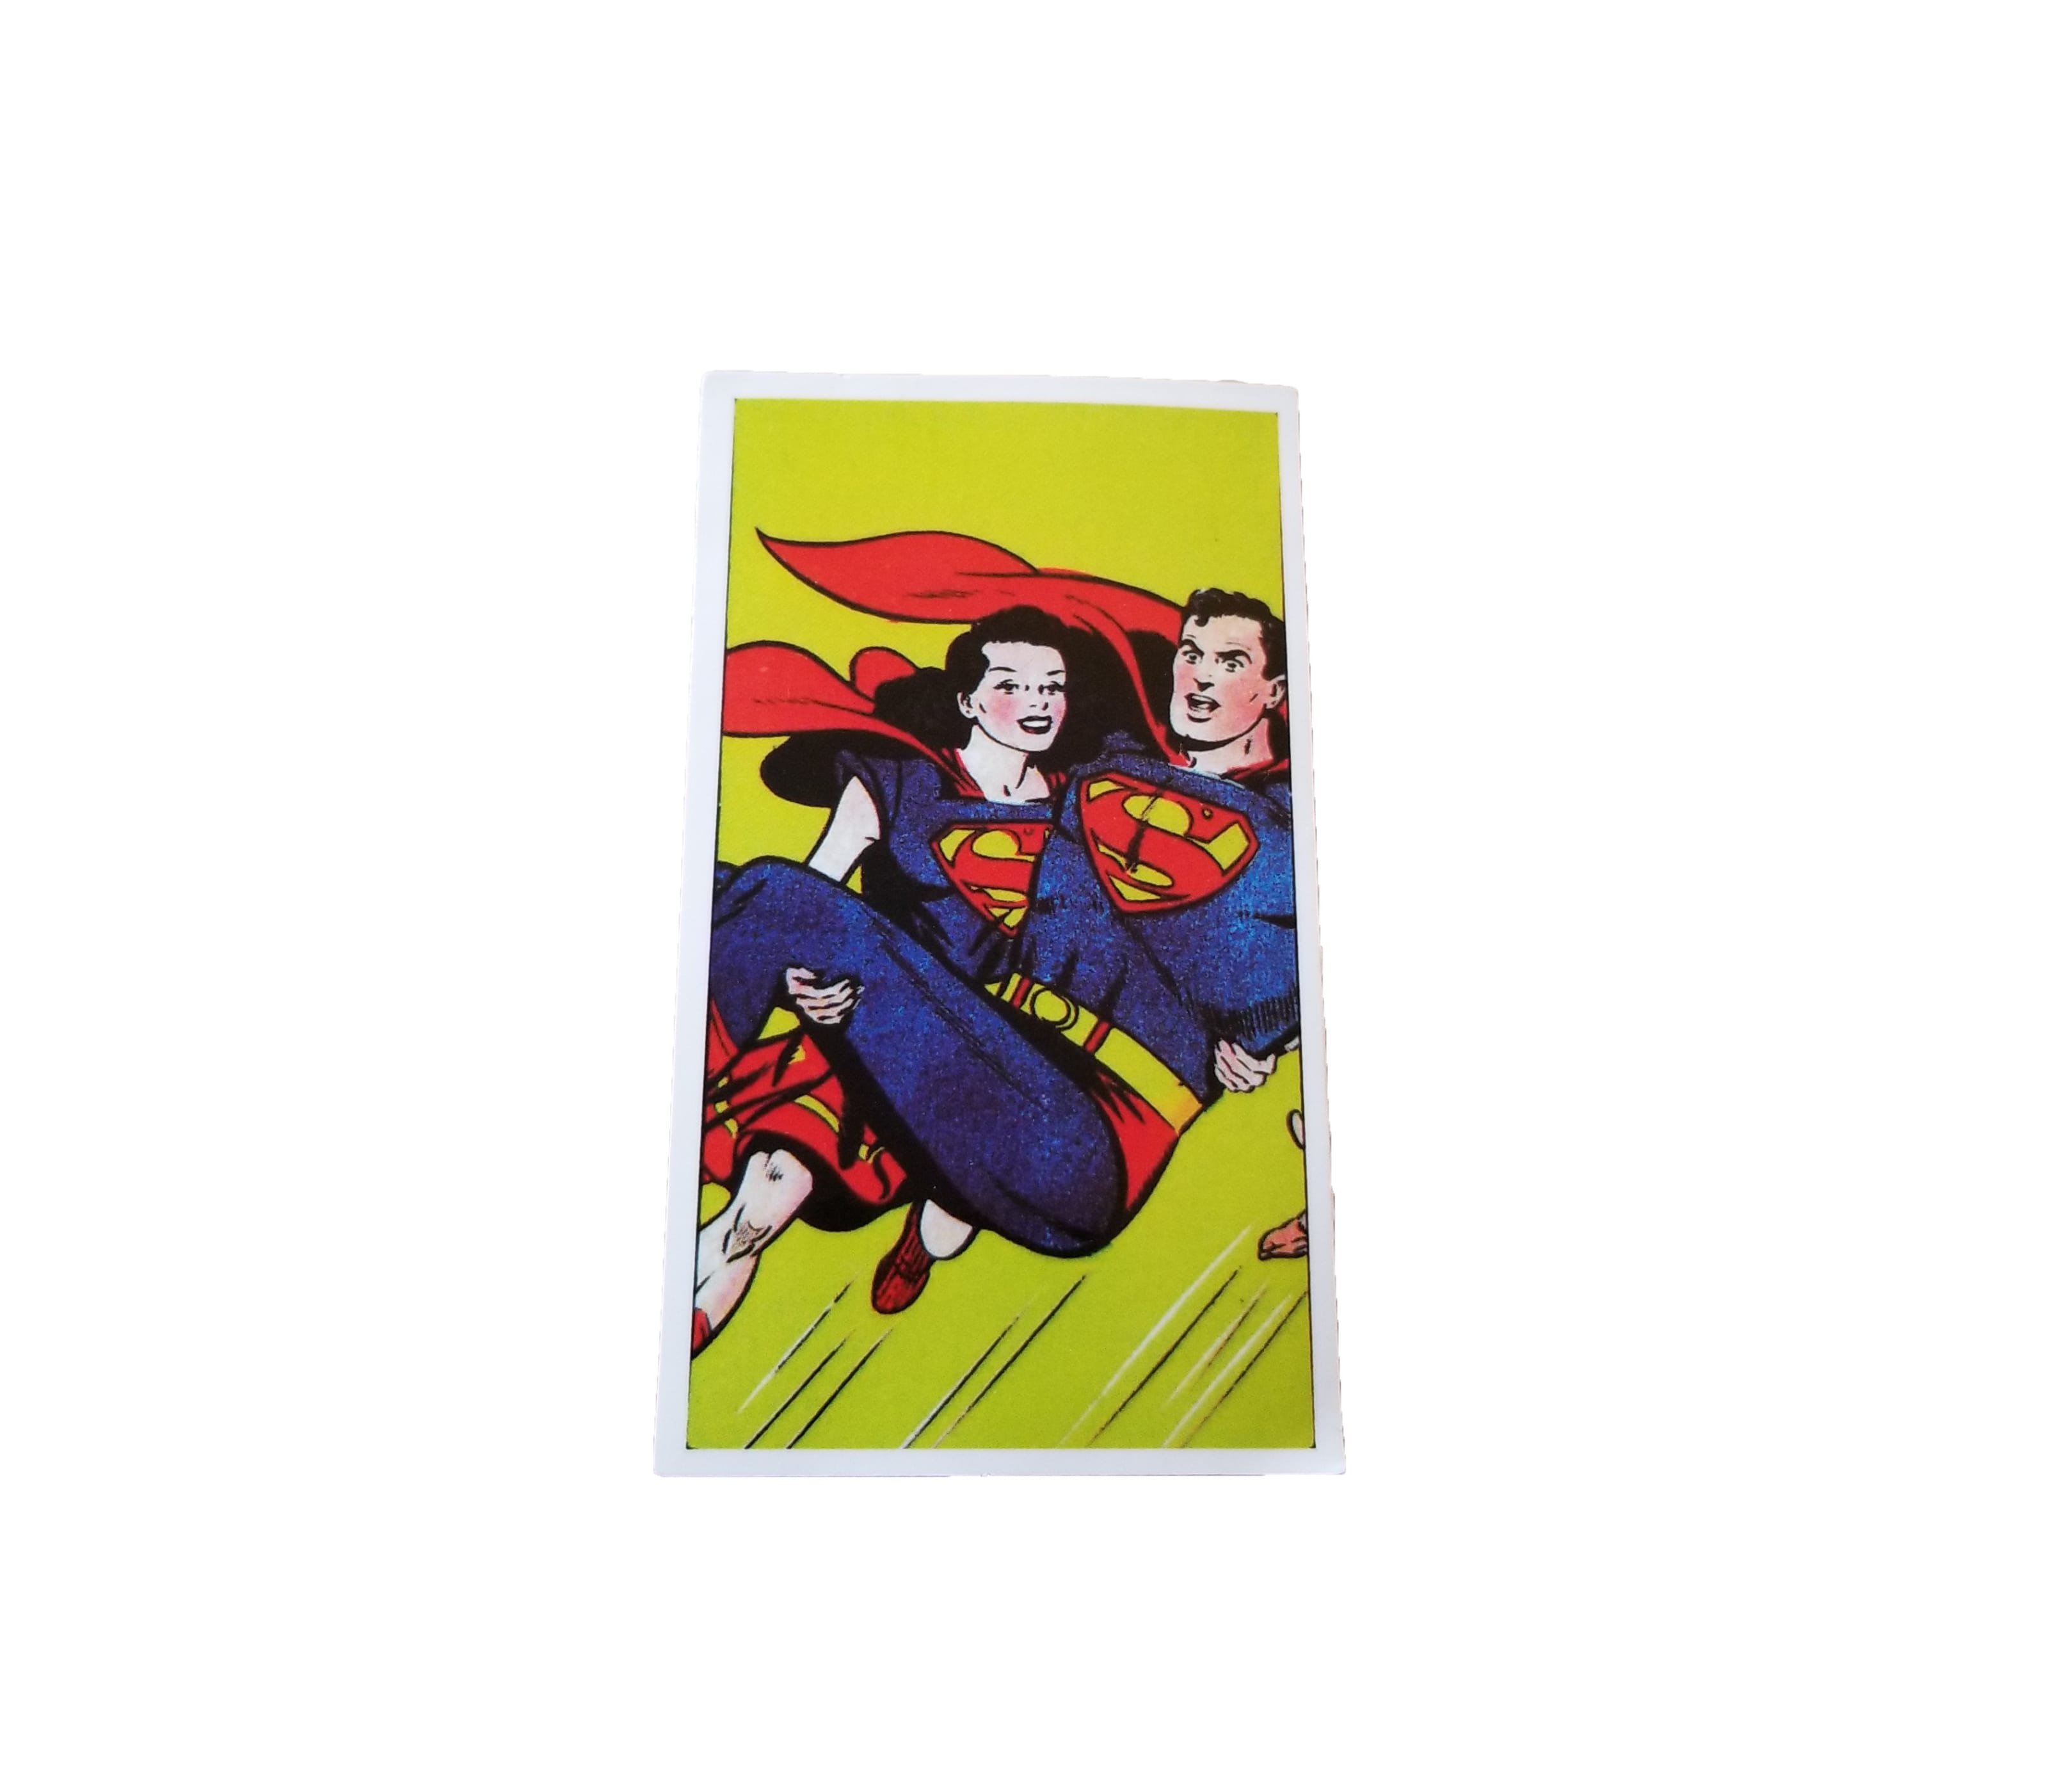 a rare sticker of wonder woman carrying superman